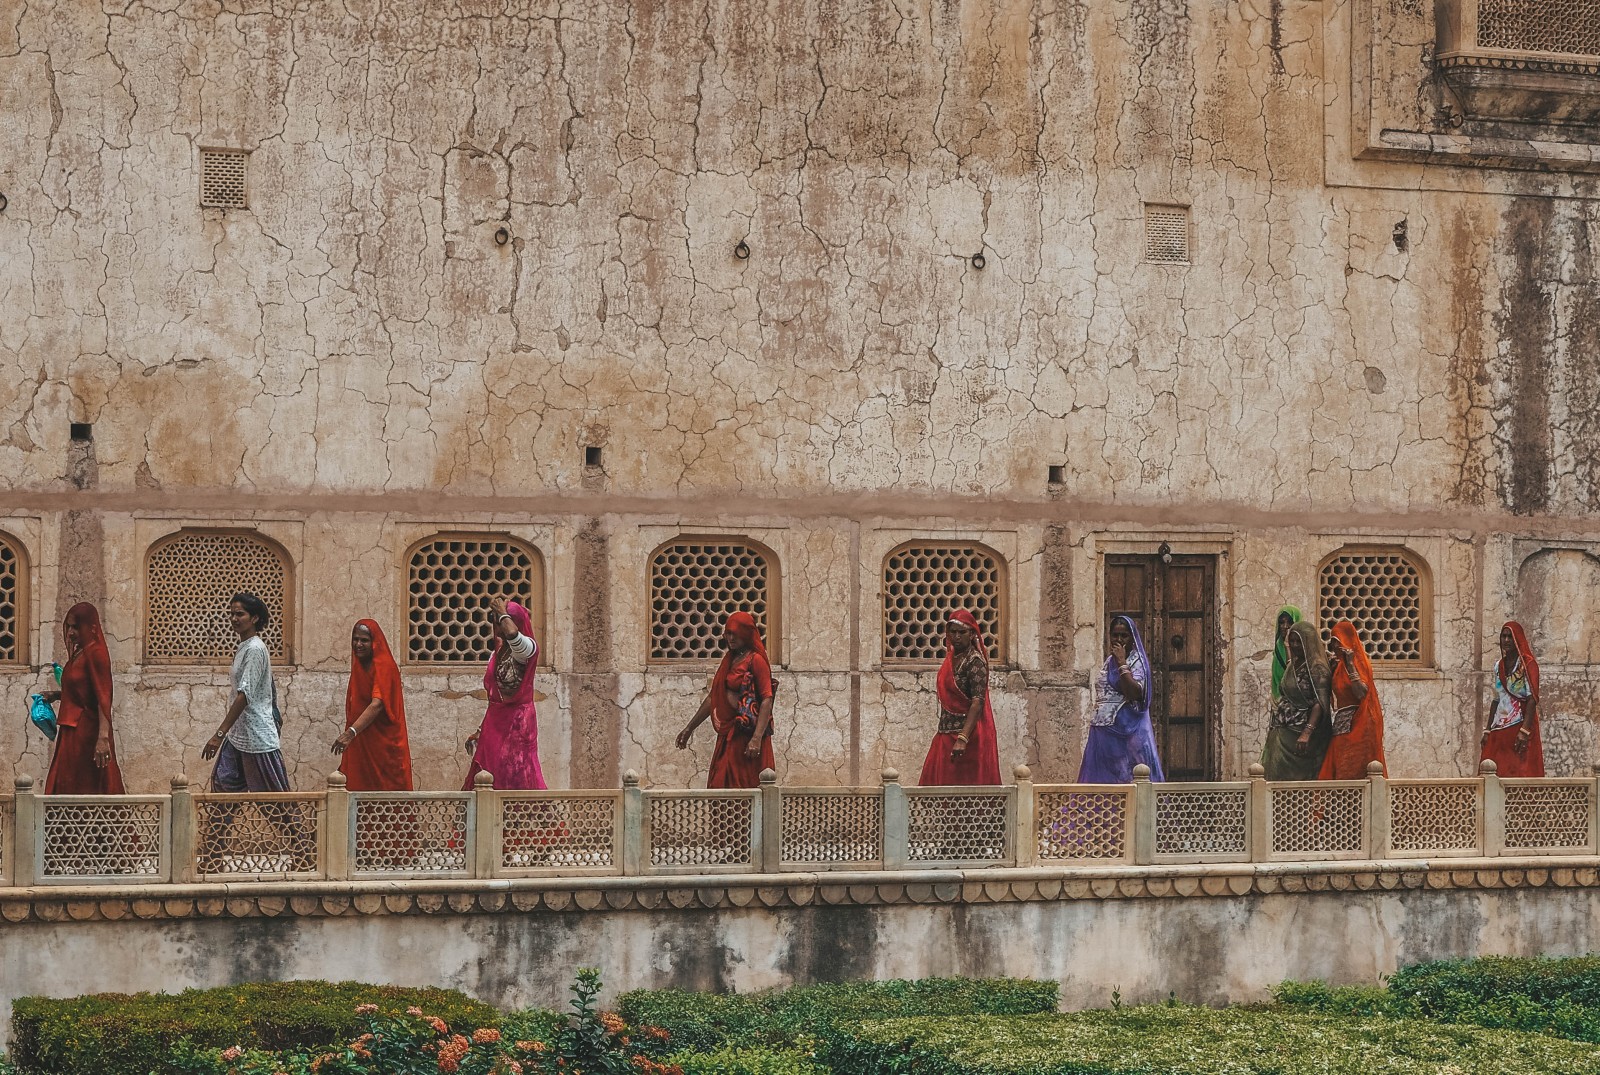 Indian ladies in Amber Fort in Jaipur